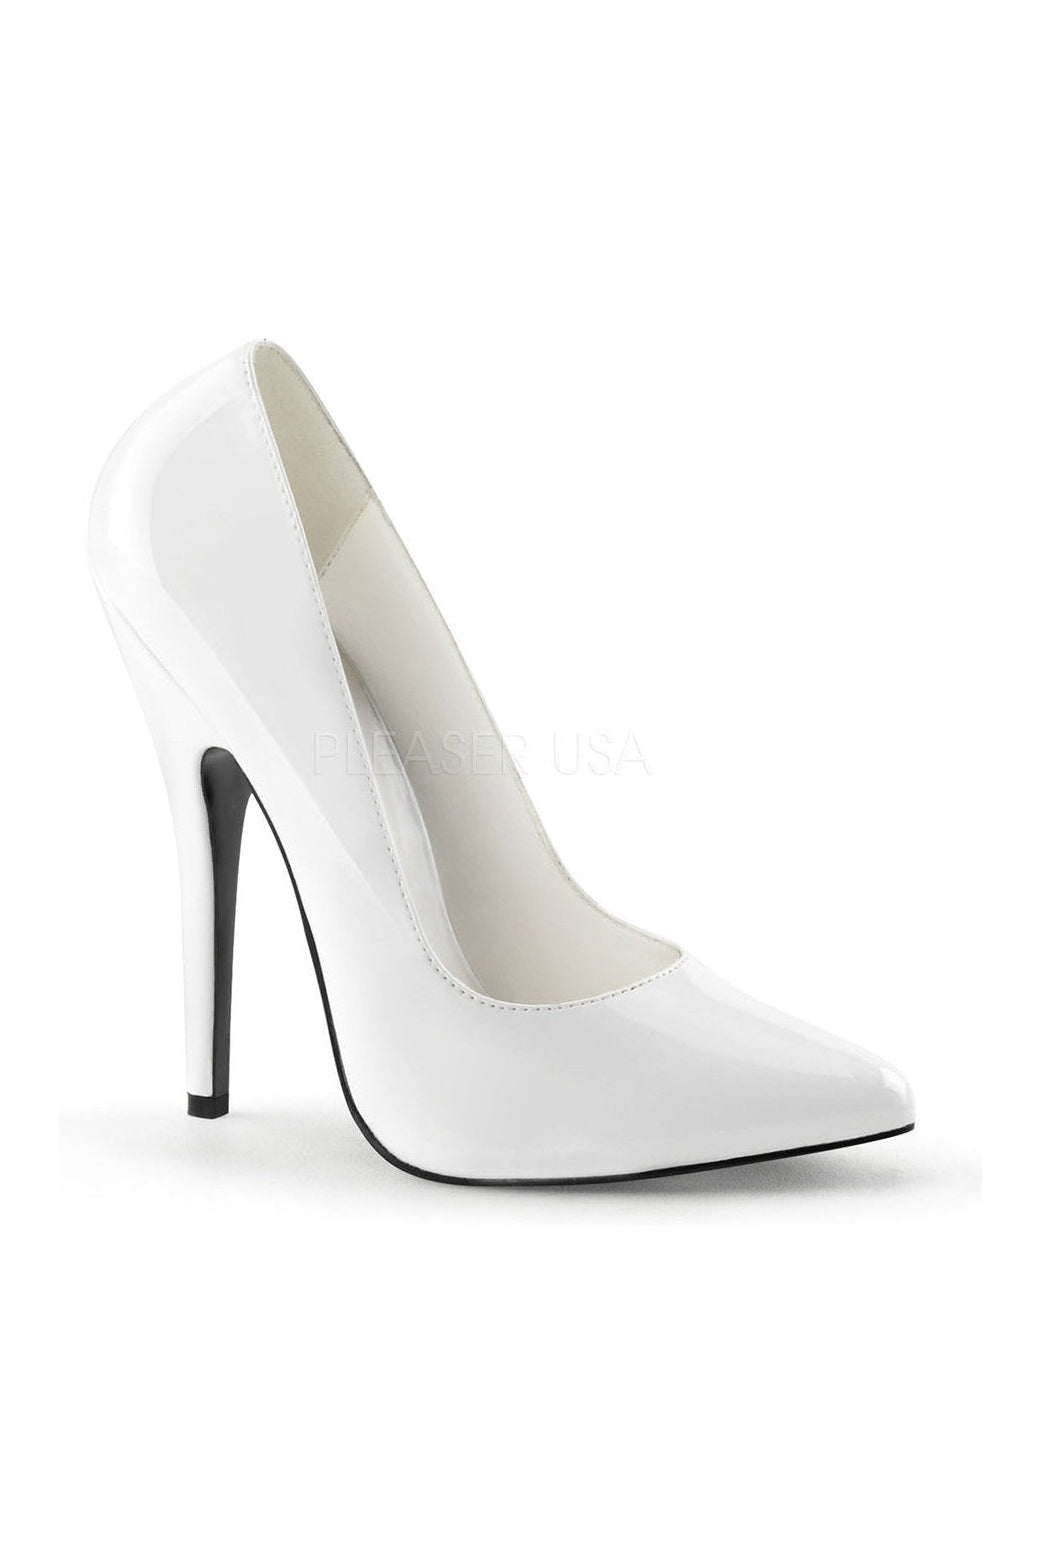 DOMINA-420 Pump | White Patent-Pumps- Stripper Shoes at SEXYSHOES.COM